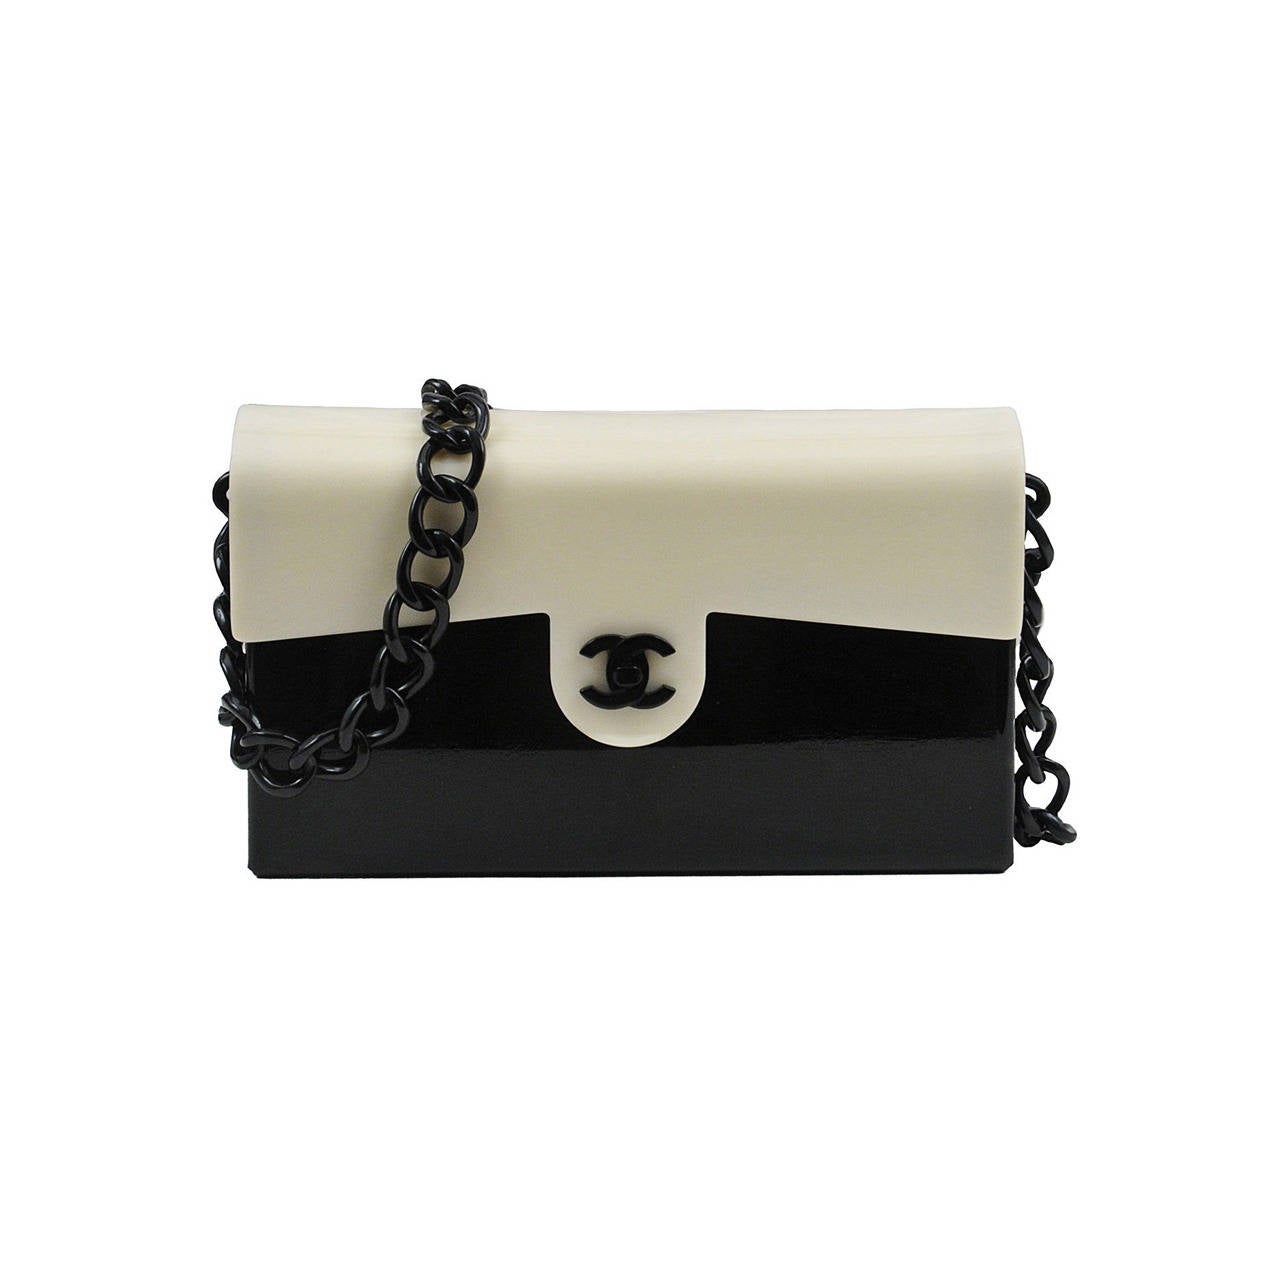 Chanel Monochrome Acrylic Shoulder Bag